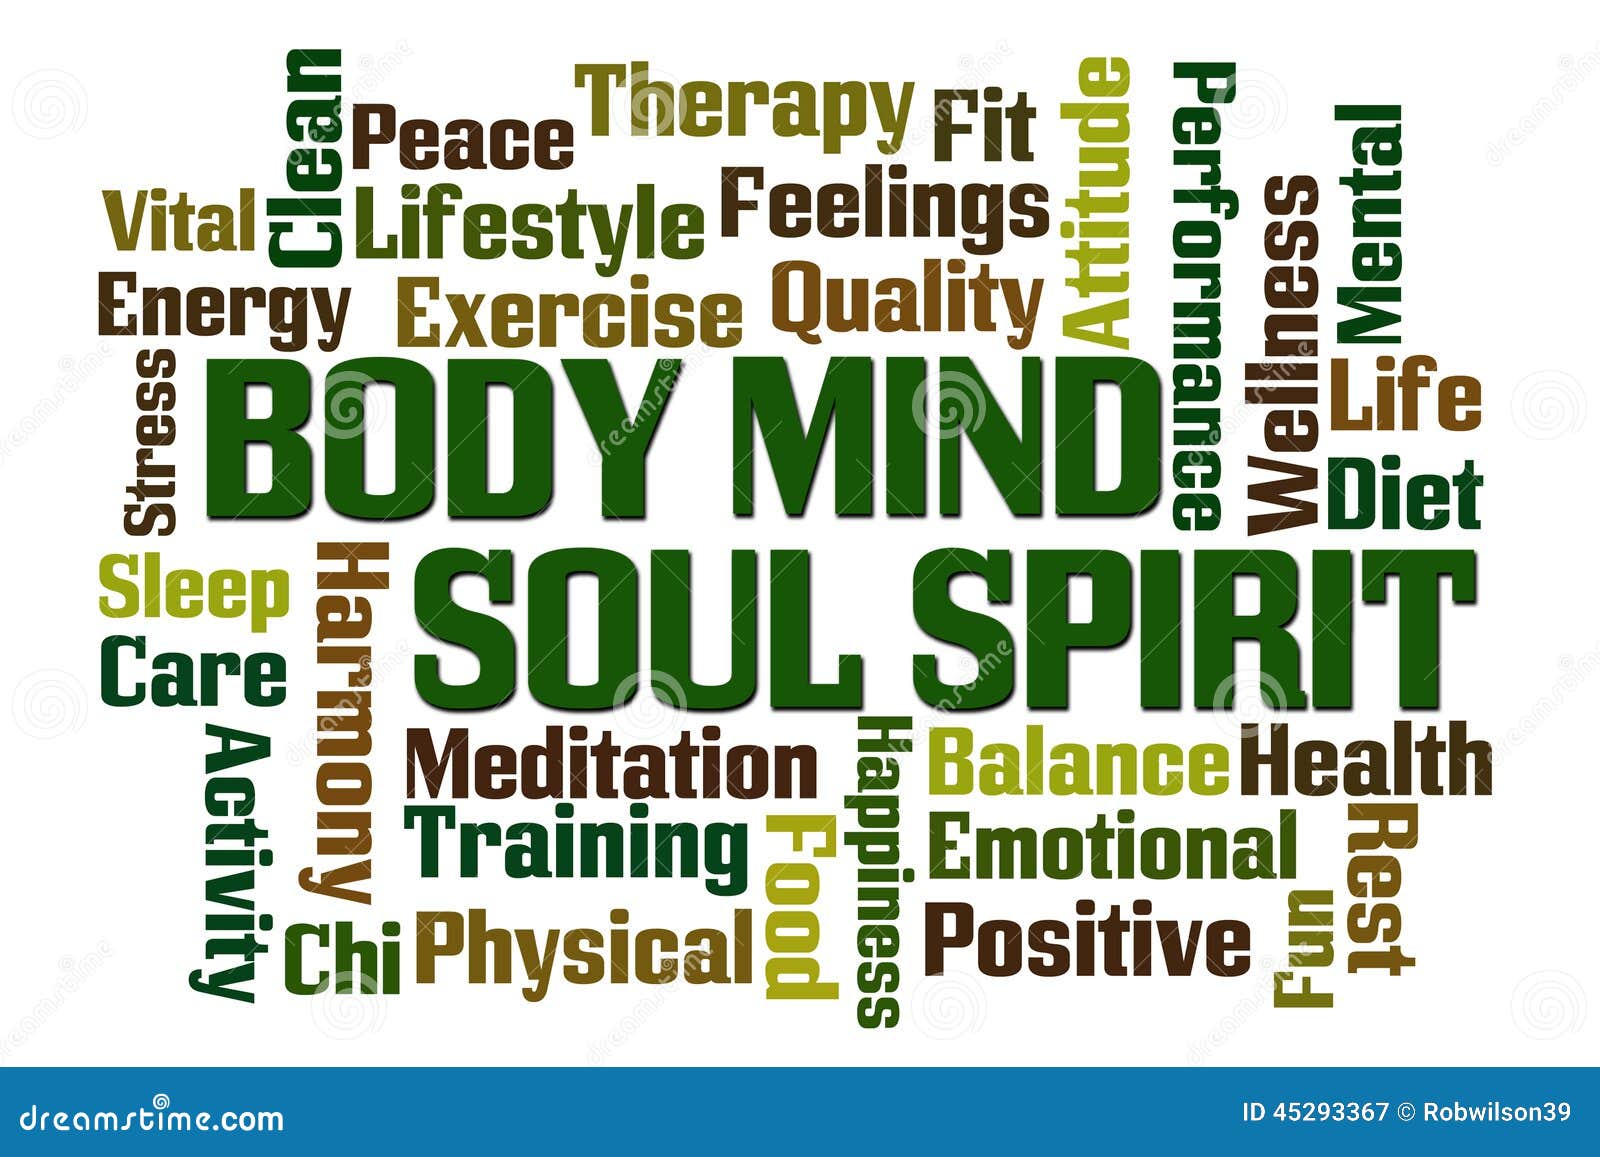 body mind soul spirit